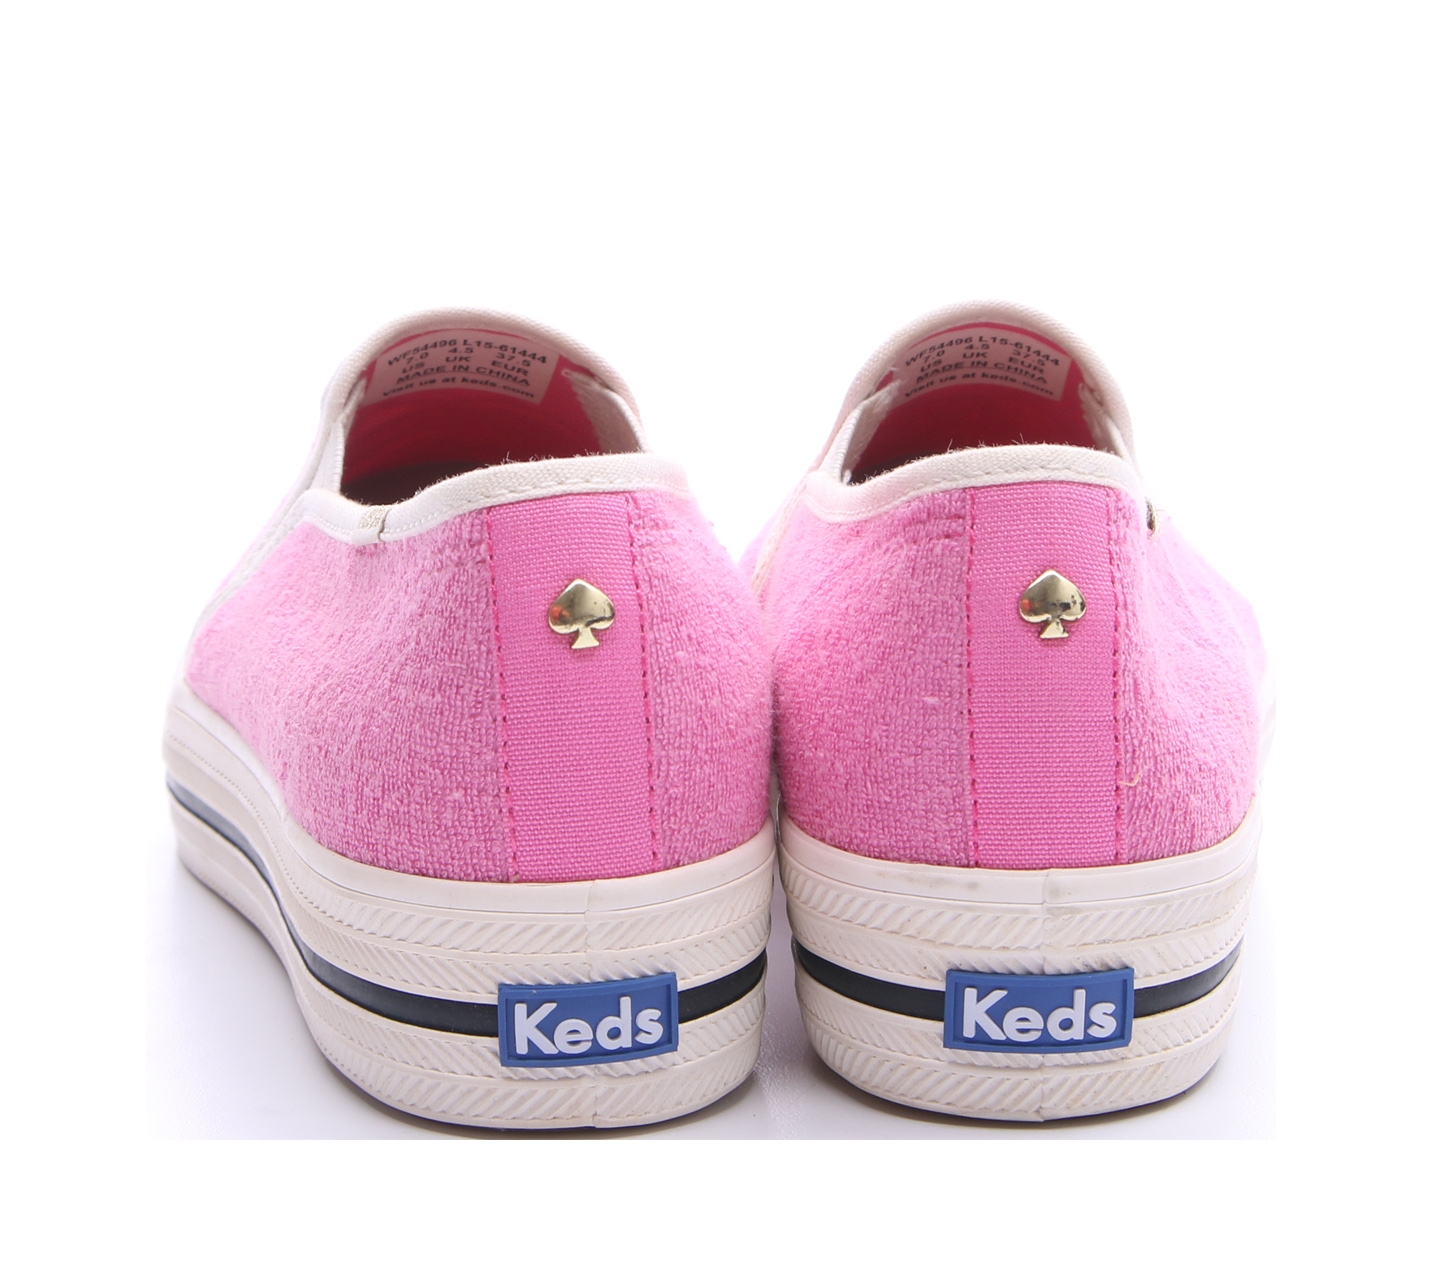 Keds For Kate Spade Pink Slip On Flats